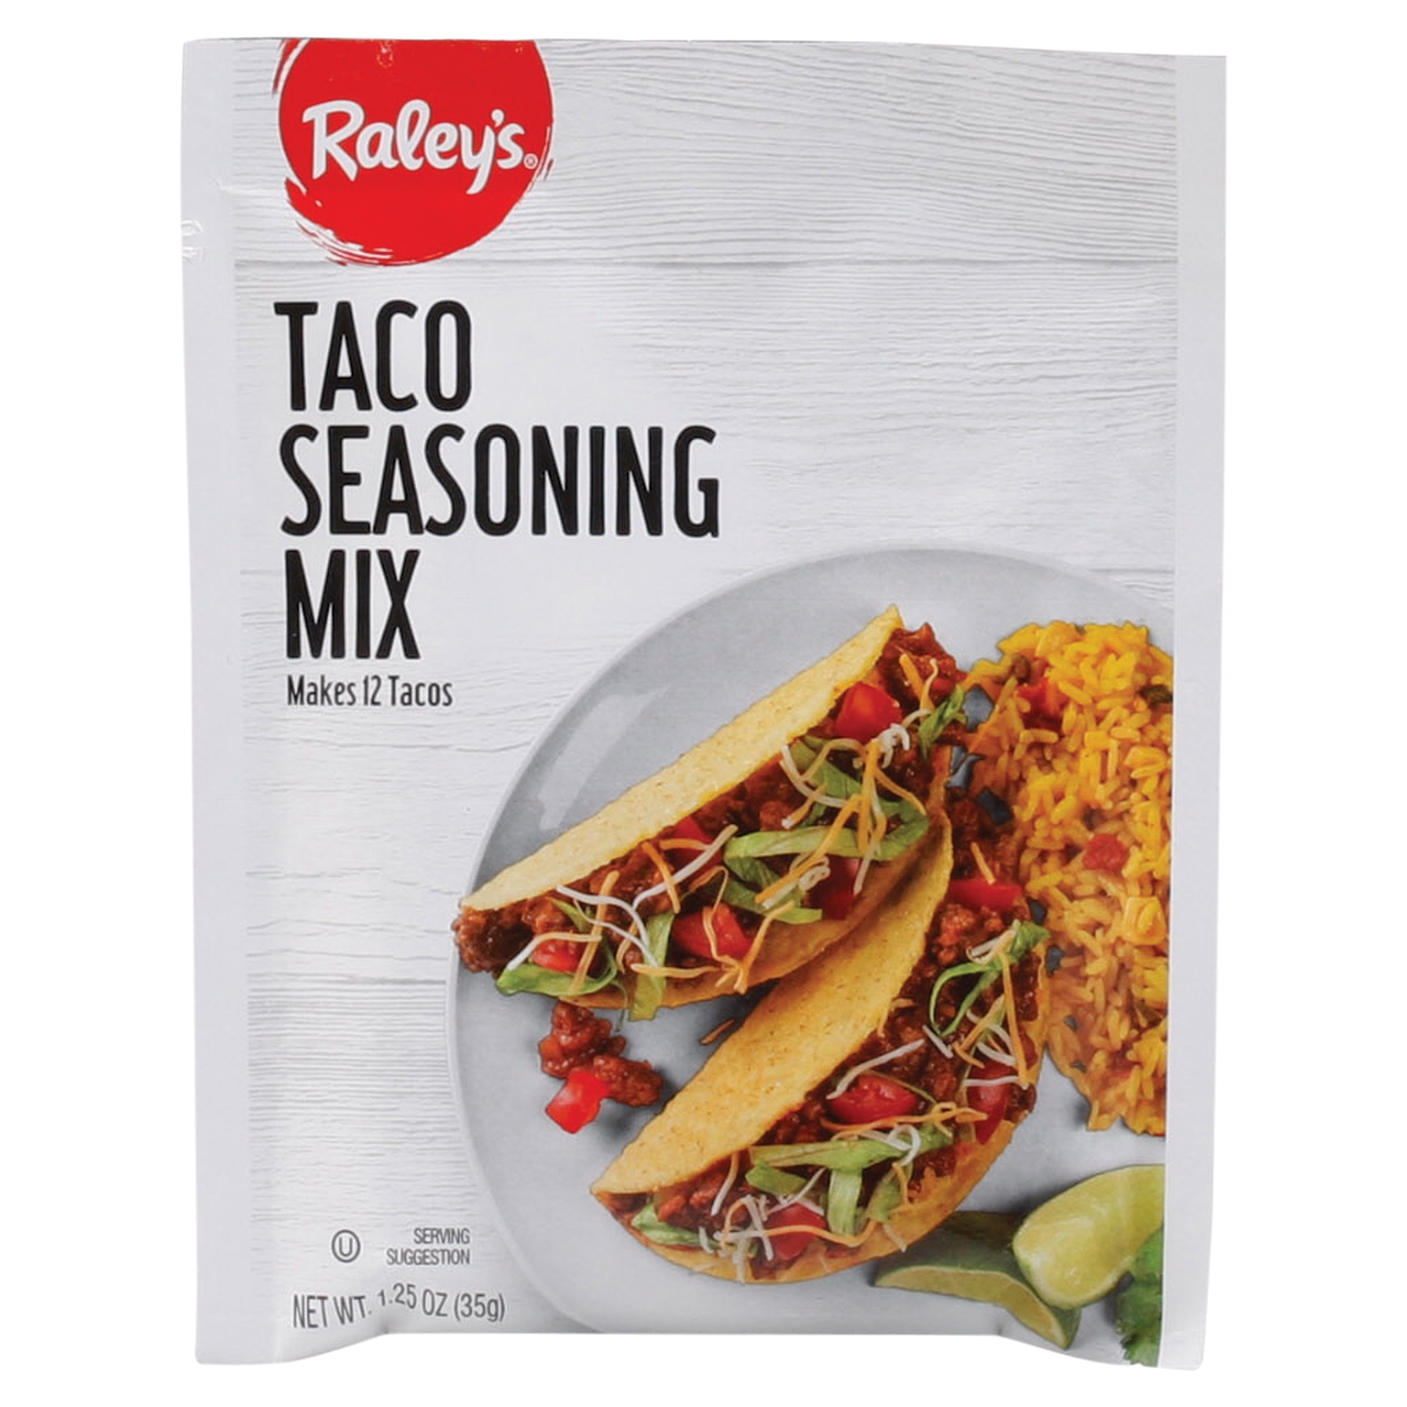 Dash All Natural Taco Seasoning Mix, 1.25 Ounce -- 12 per case